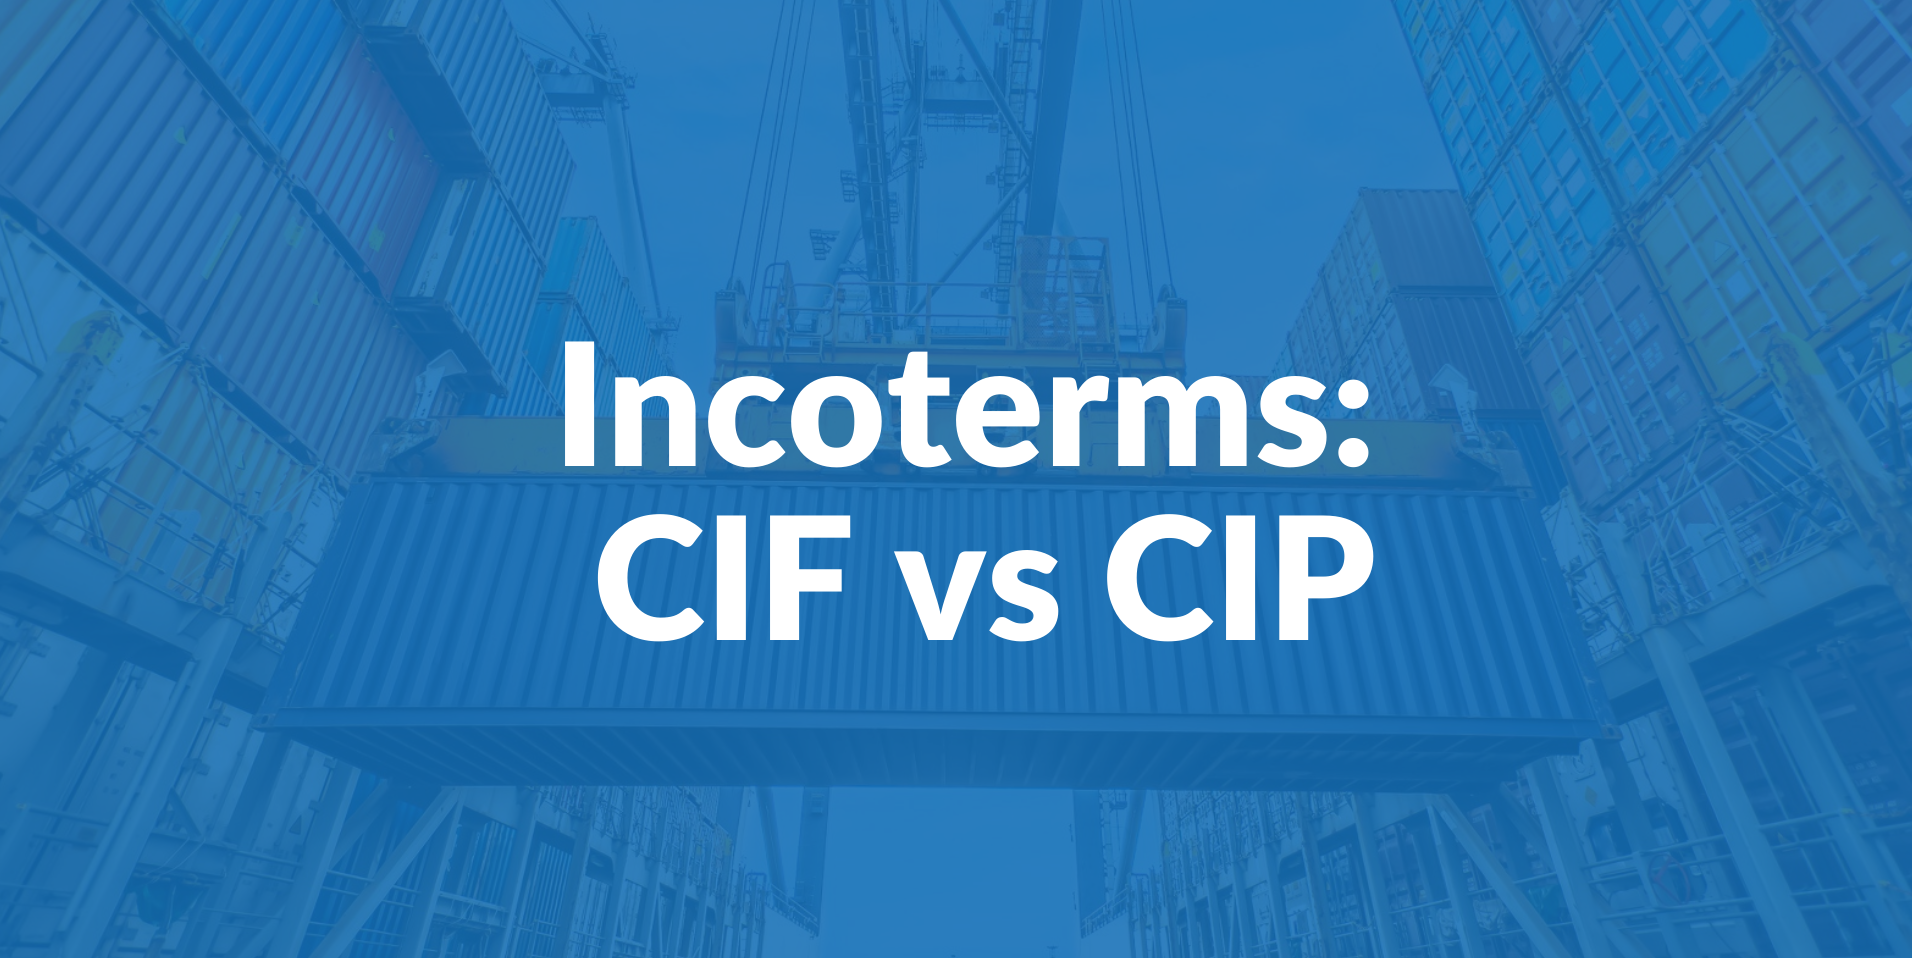 cif-vs-cip-explained (1).png